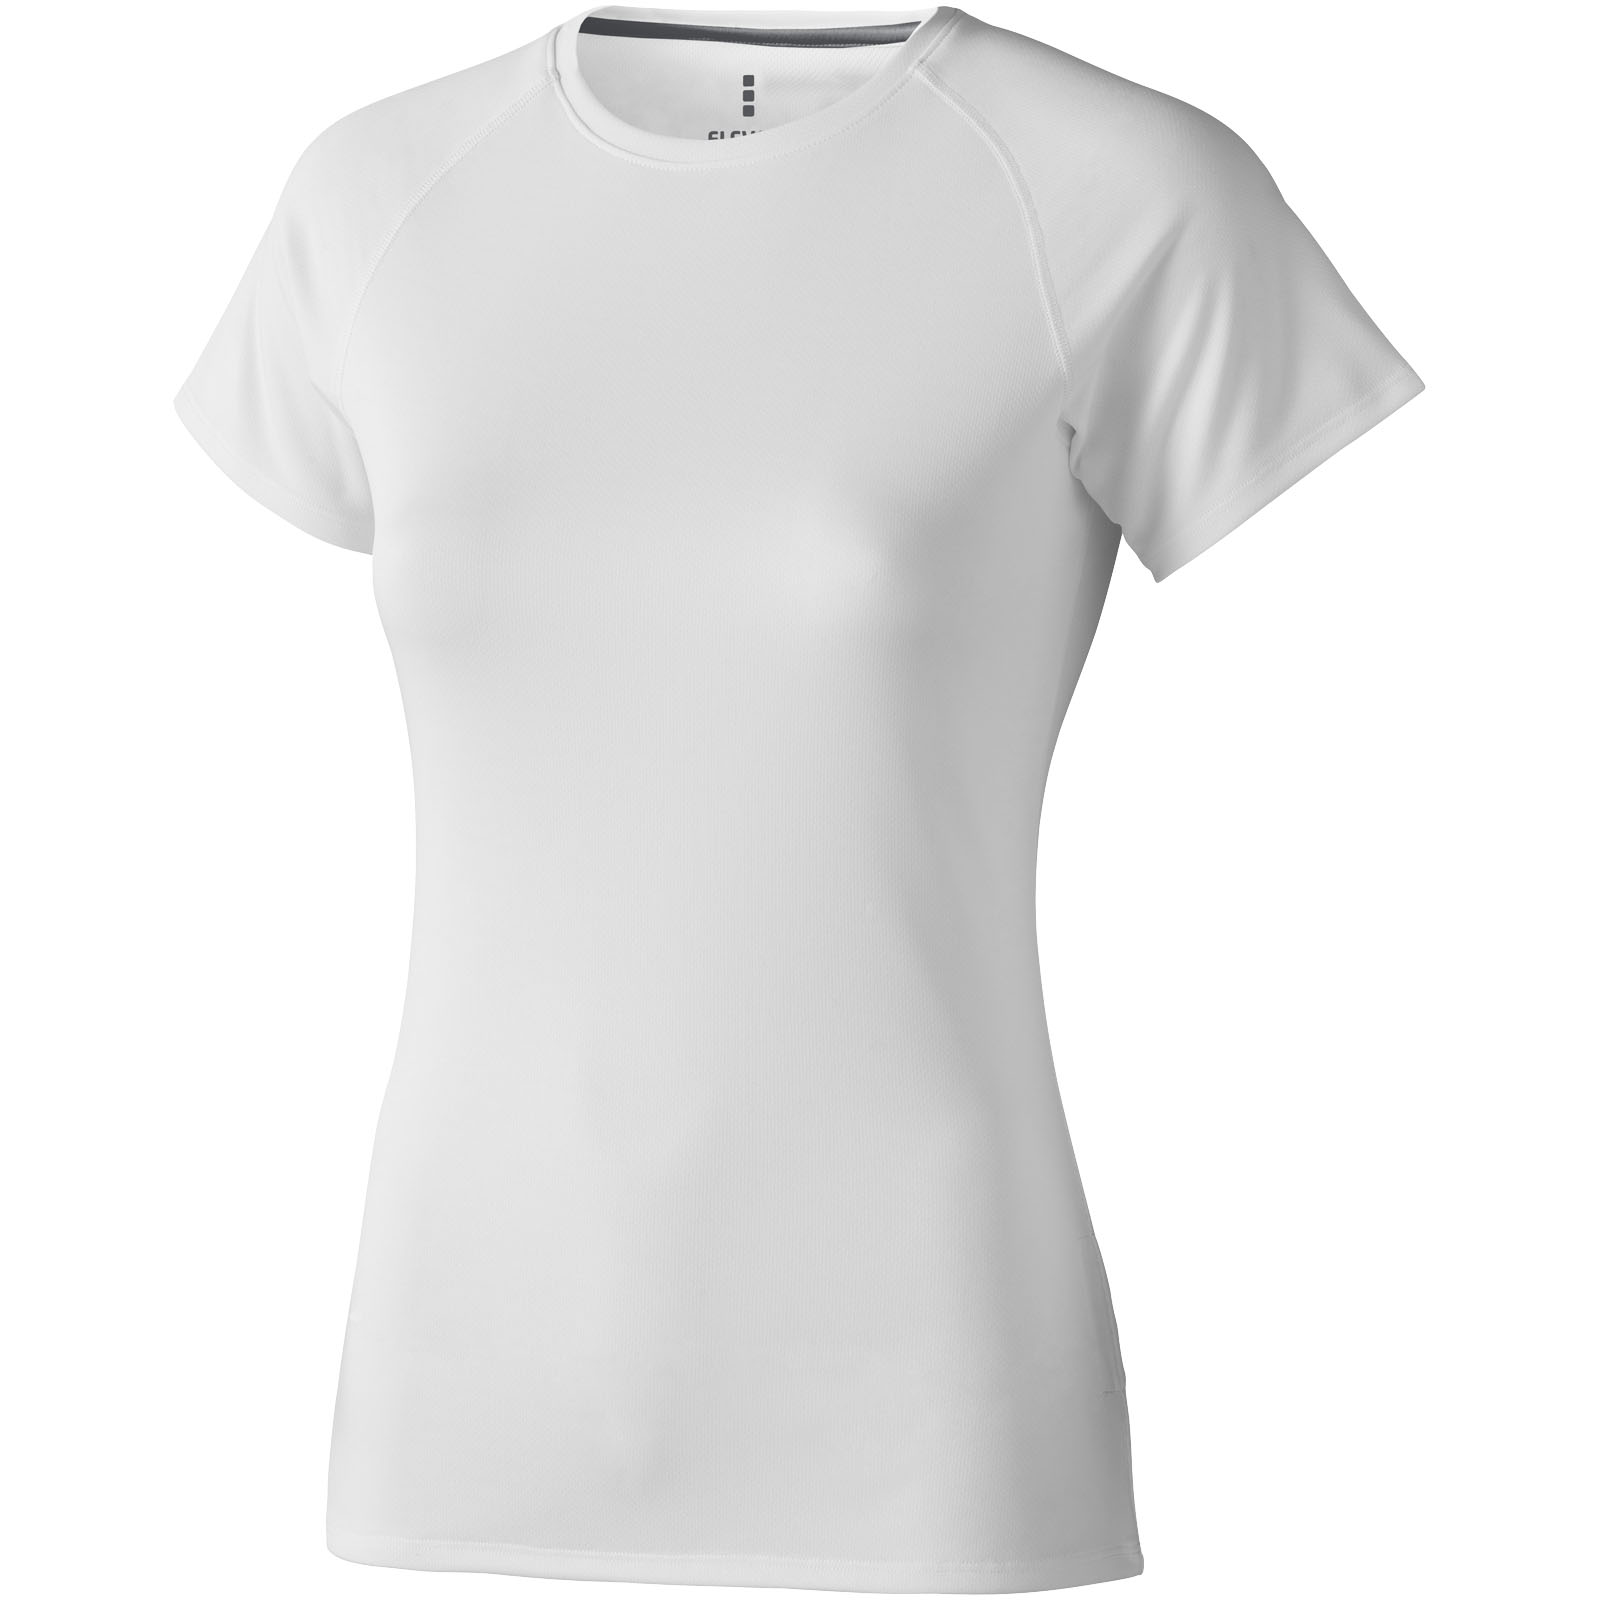 Clothing - Niagara short sleeve women's cool fit t-shirt